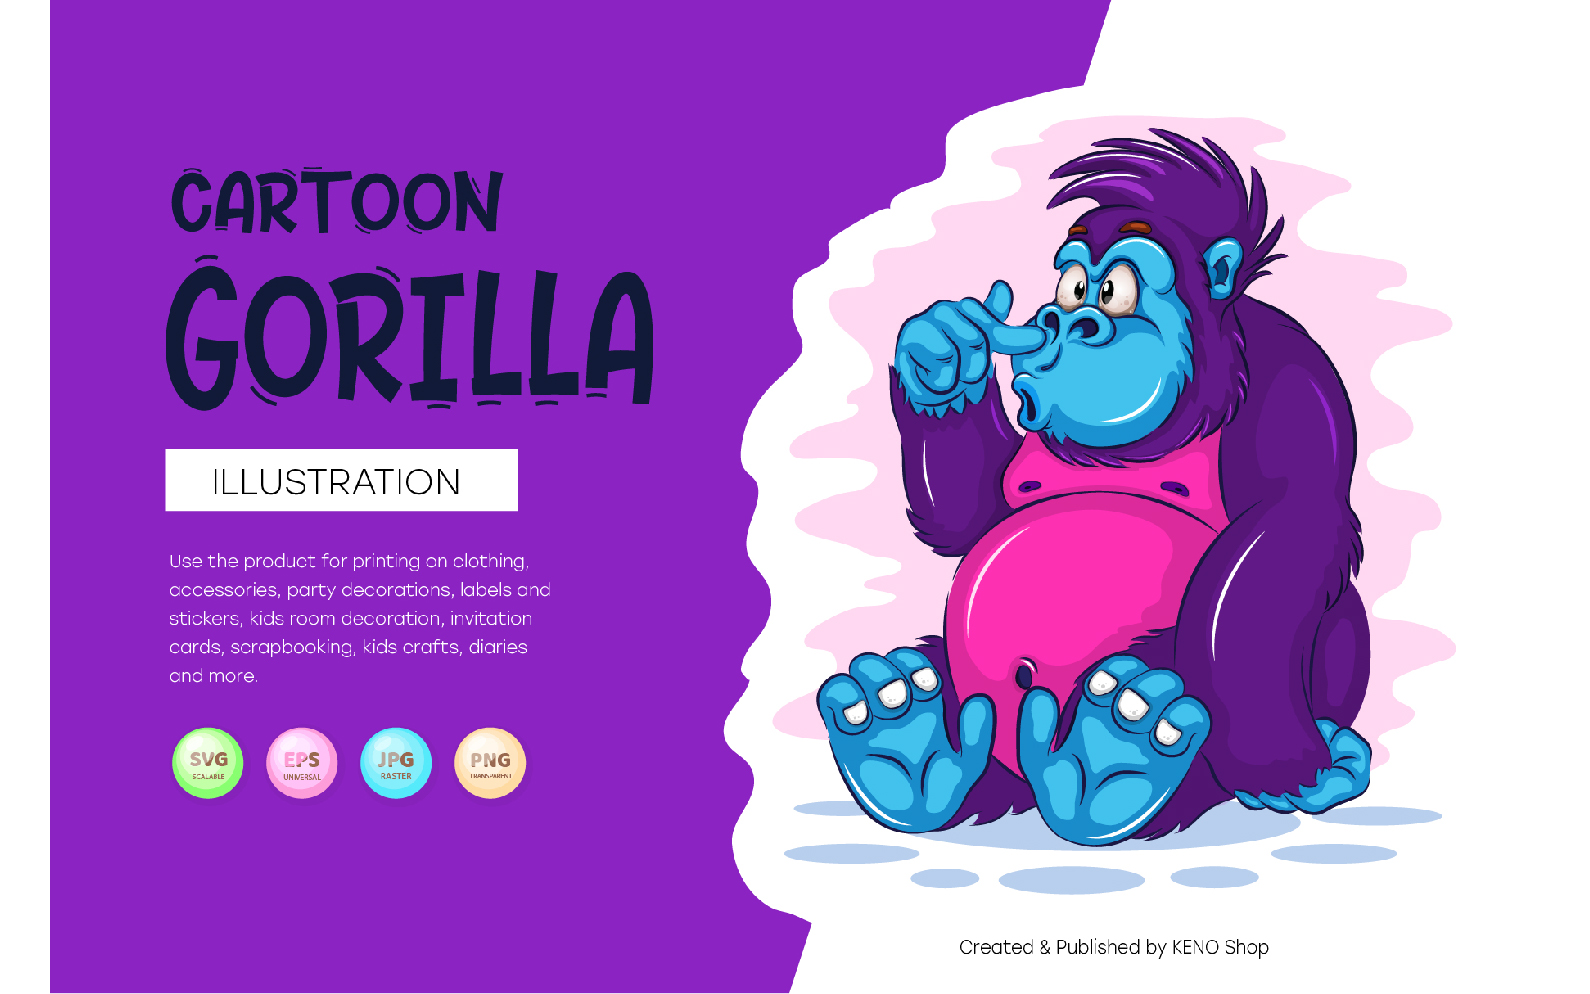 Cartoon Gorilla. T-Shirt, PNG, SVG.